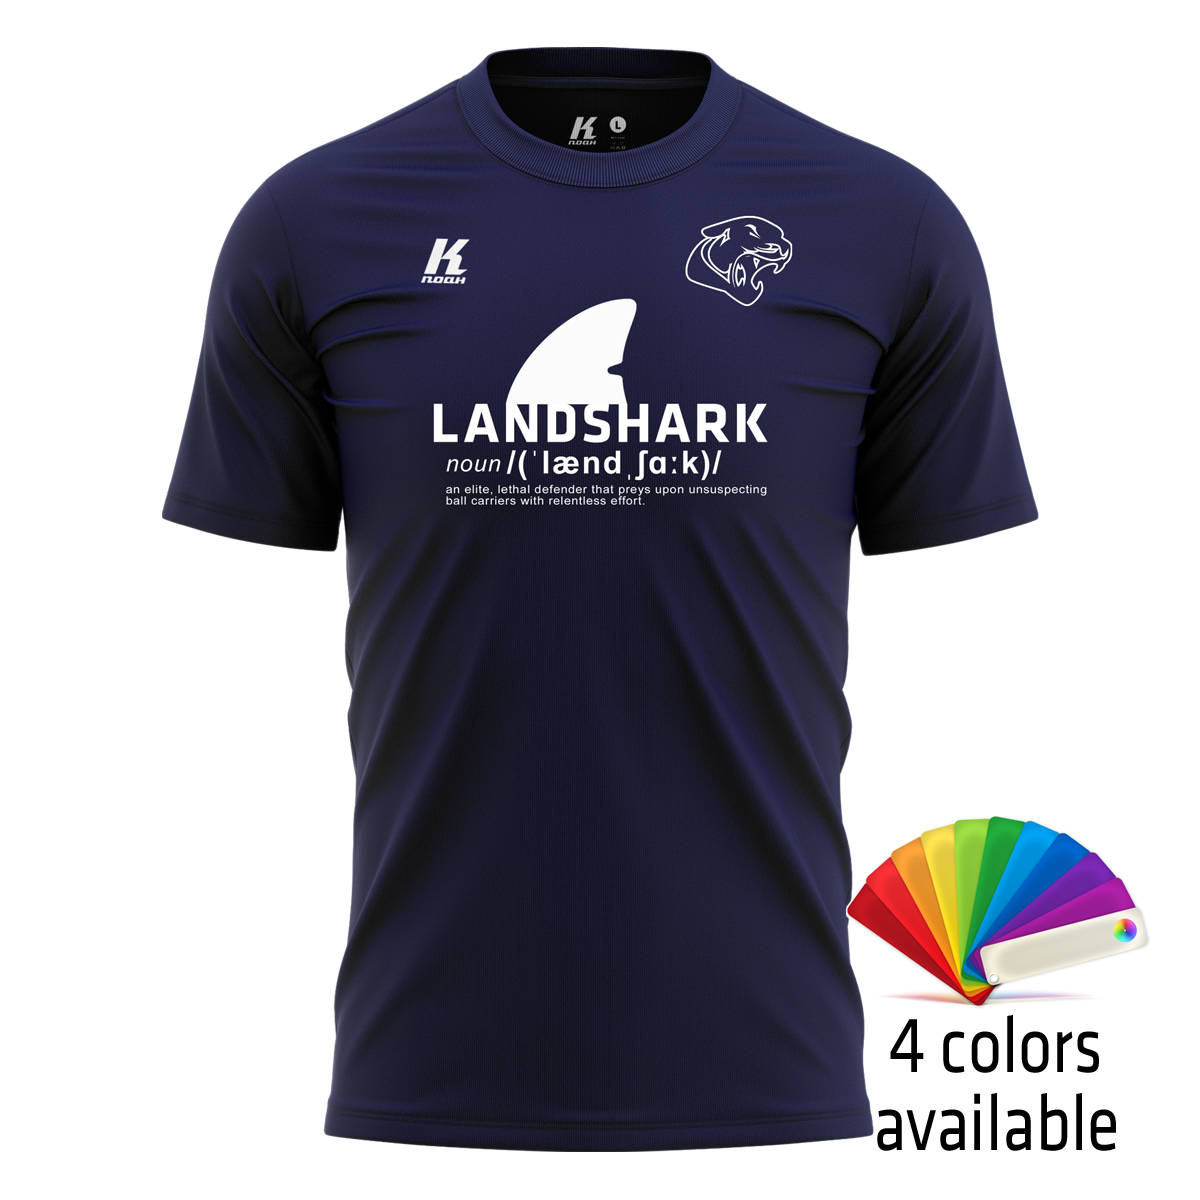 Cougars Footballmary T-Shirt "Landshark"